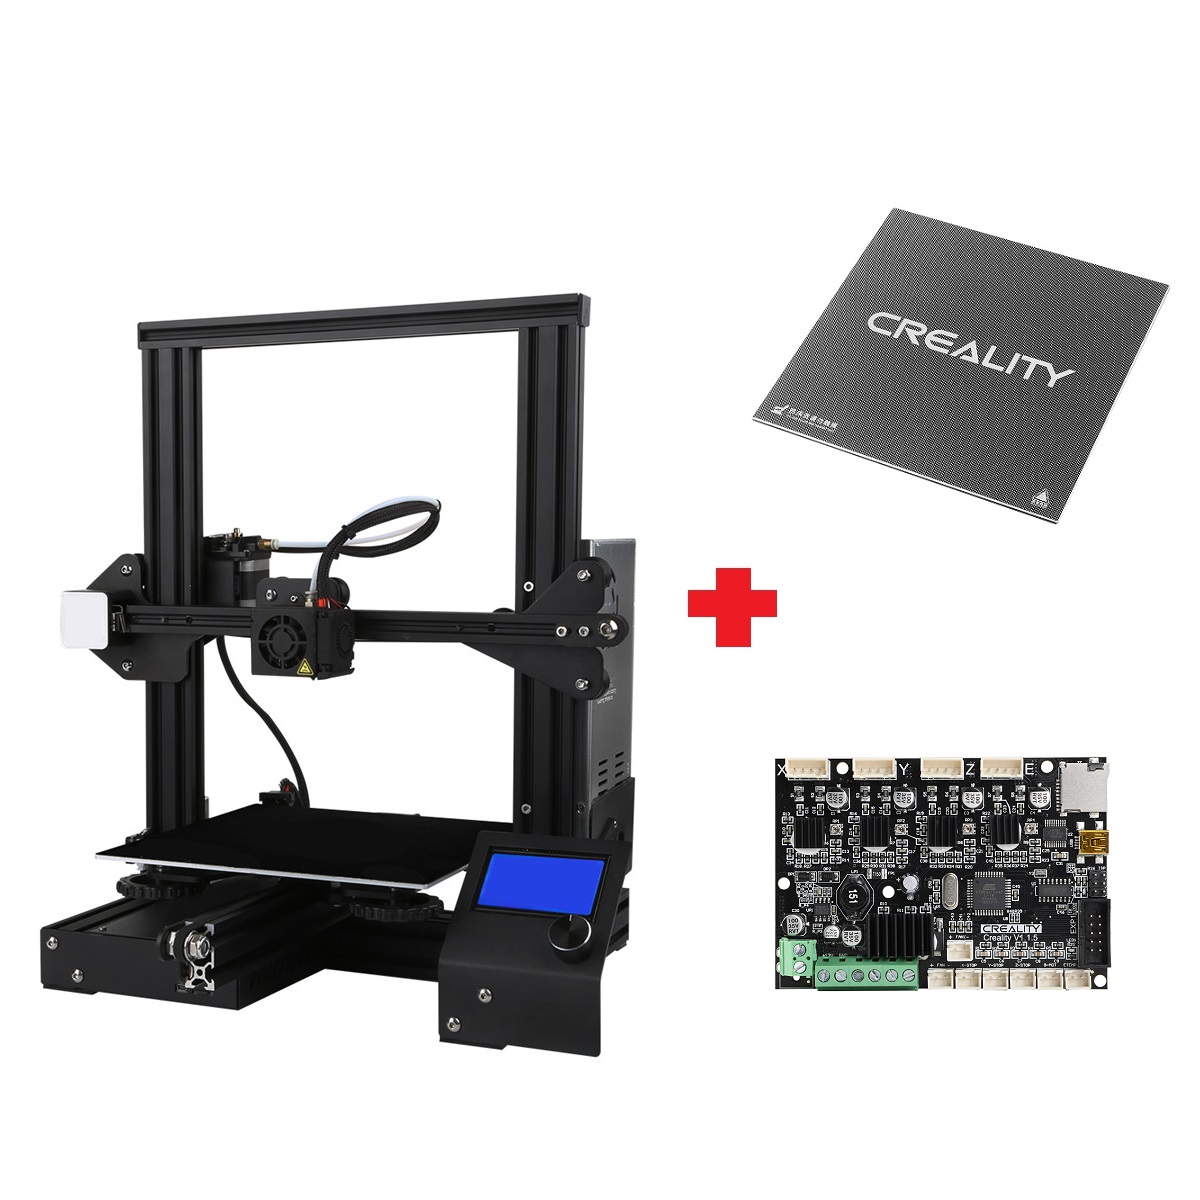 Creality 3D Creality 3D Ender-3 V-slot Prusa I3 DIY 3D Printer Kit 220x220x250mm